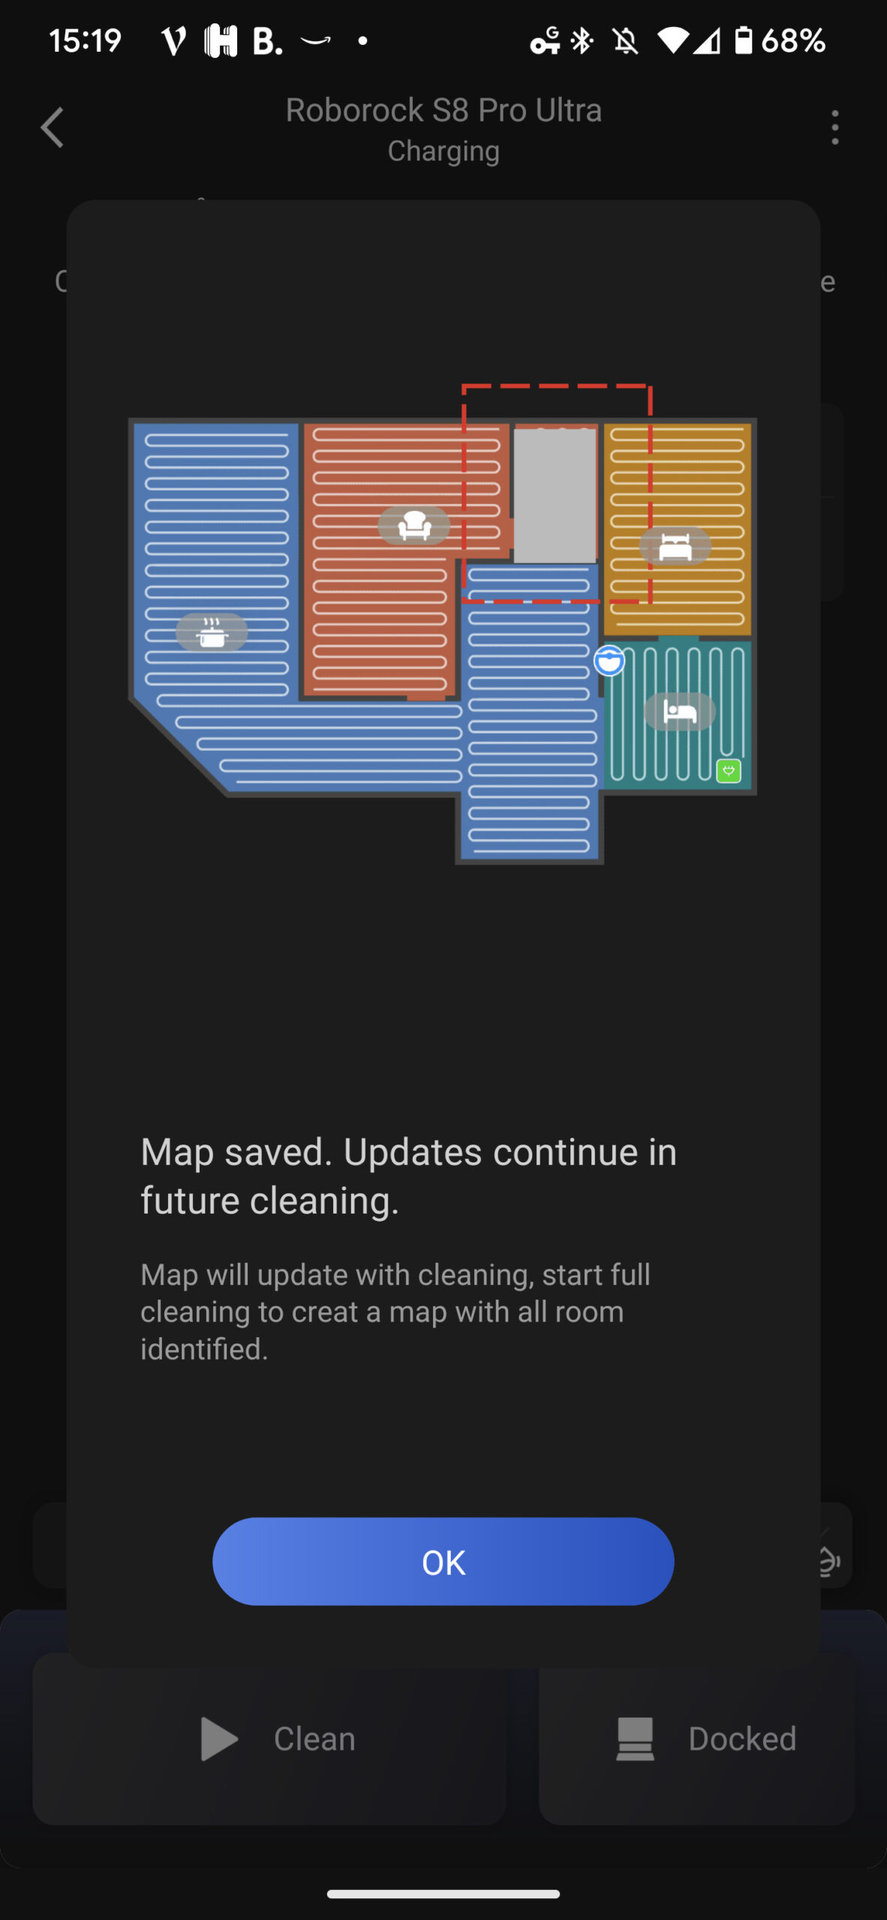 Roborock app map saved notification